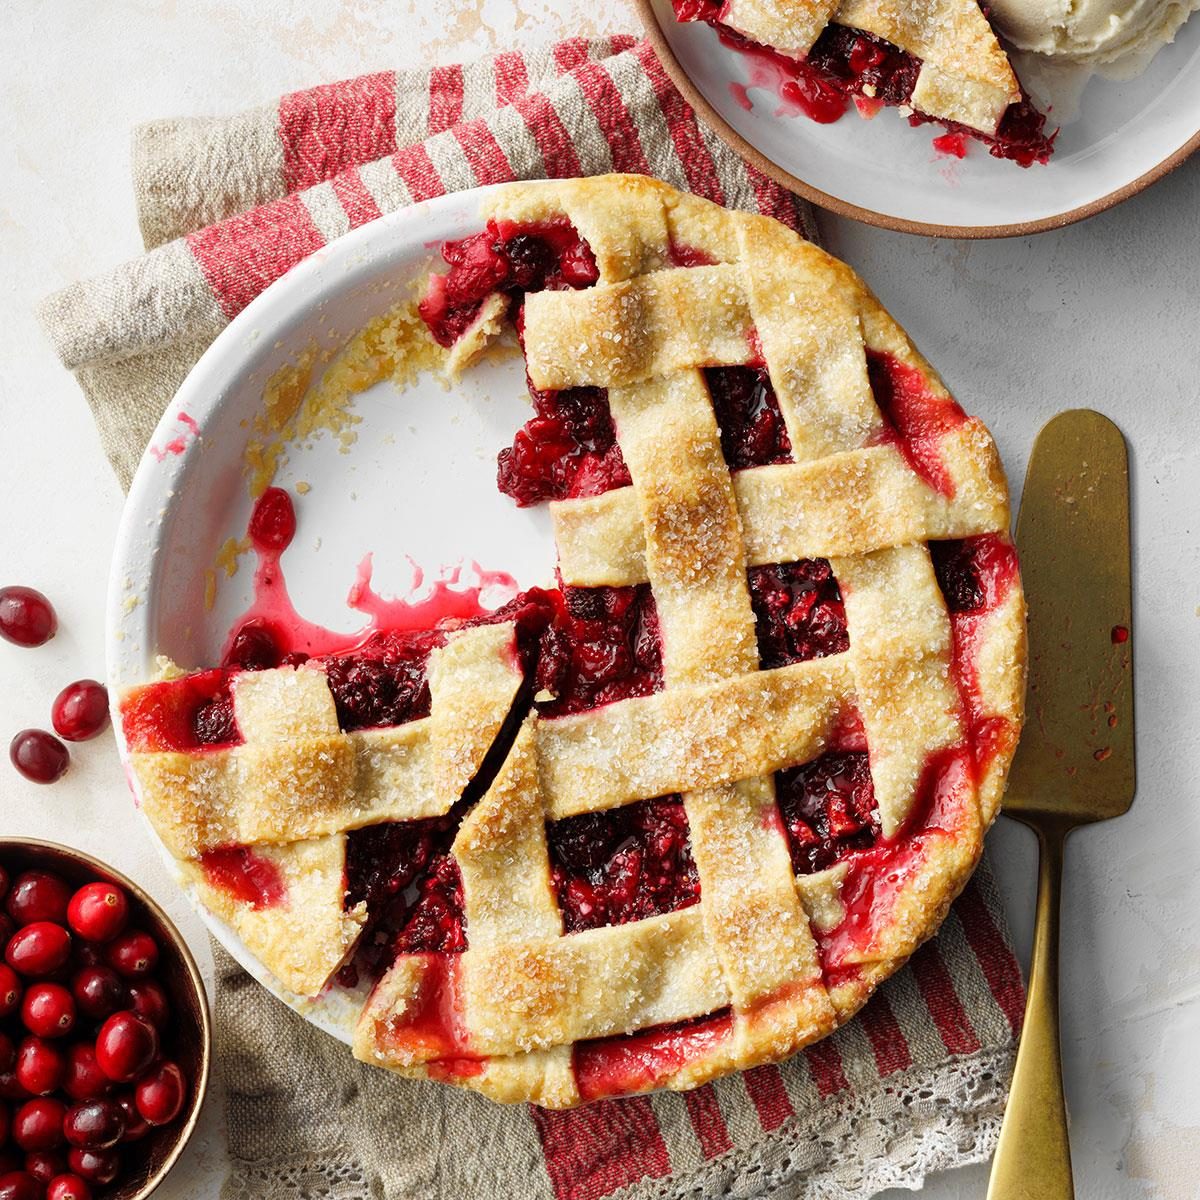 Cran-Raspberry Pie Recipe: How to Make It